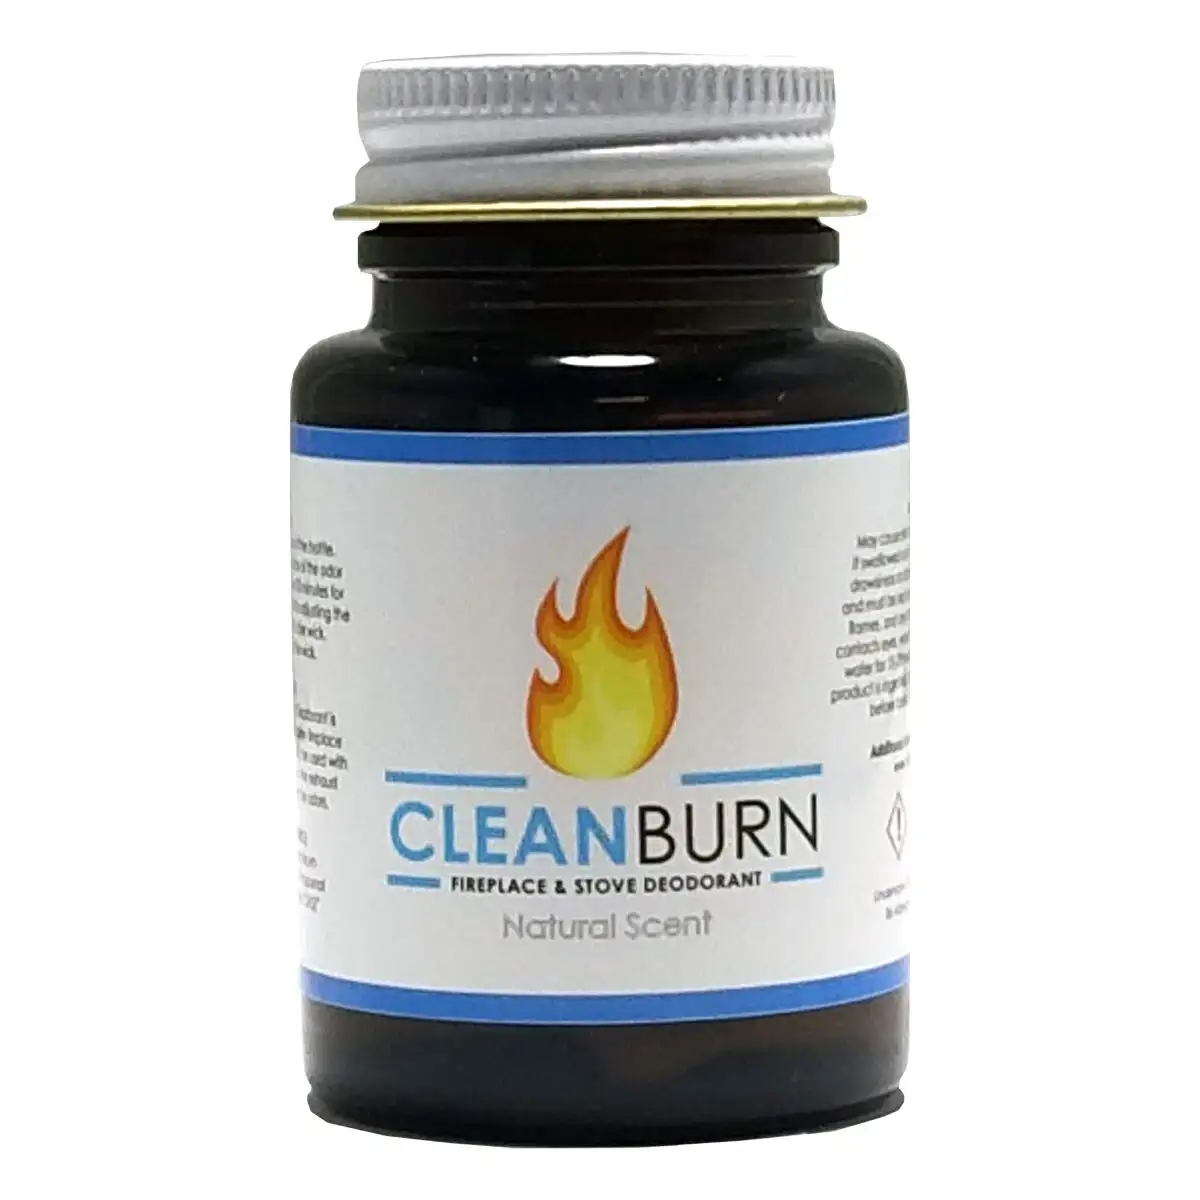 CleanBurn Fireplace & Stove Deodorant